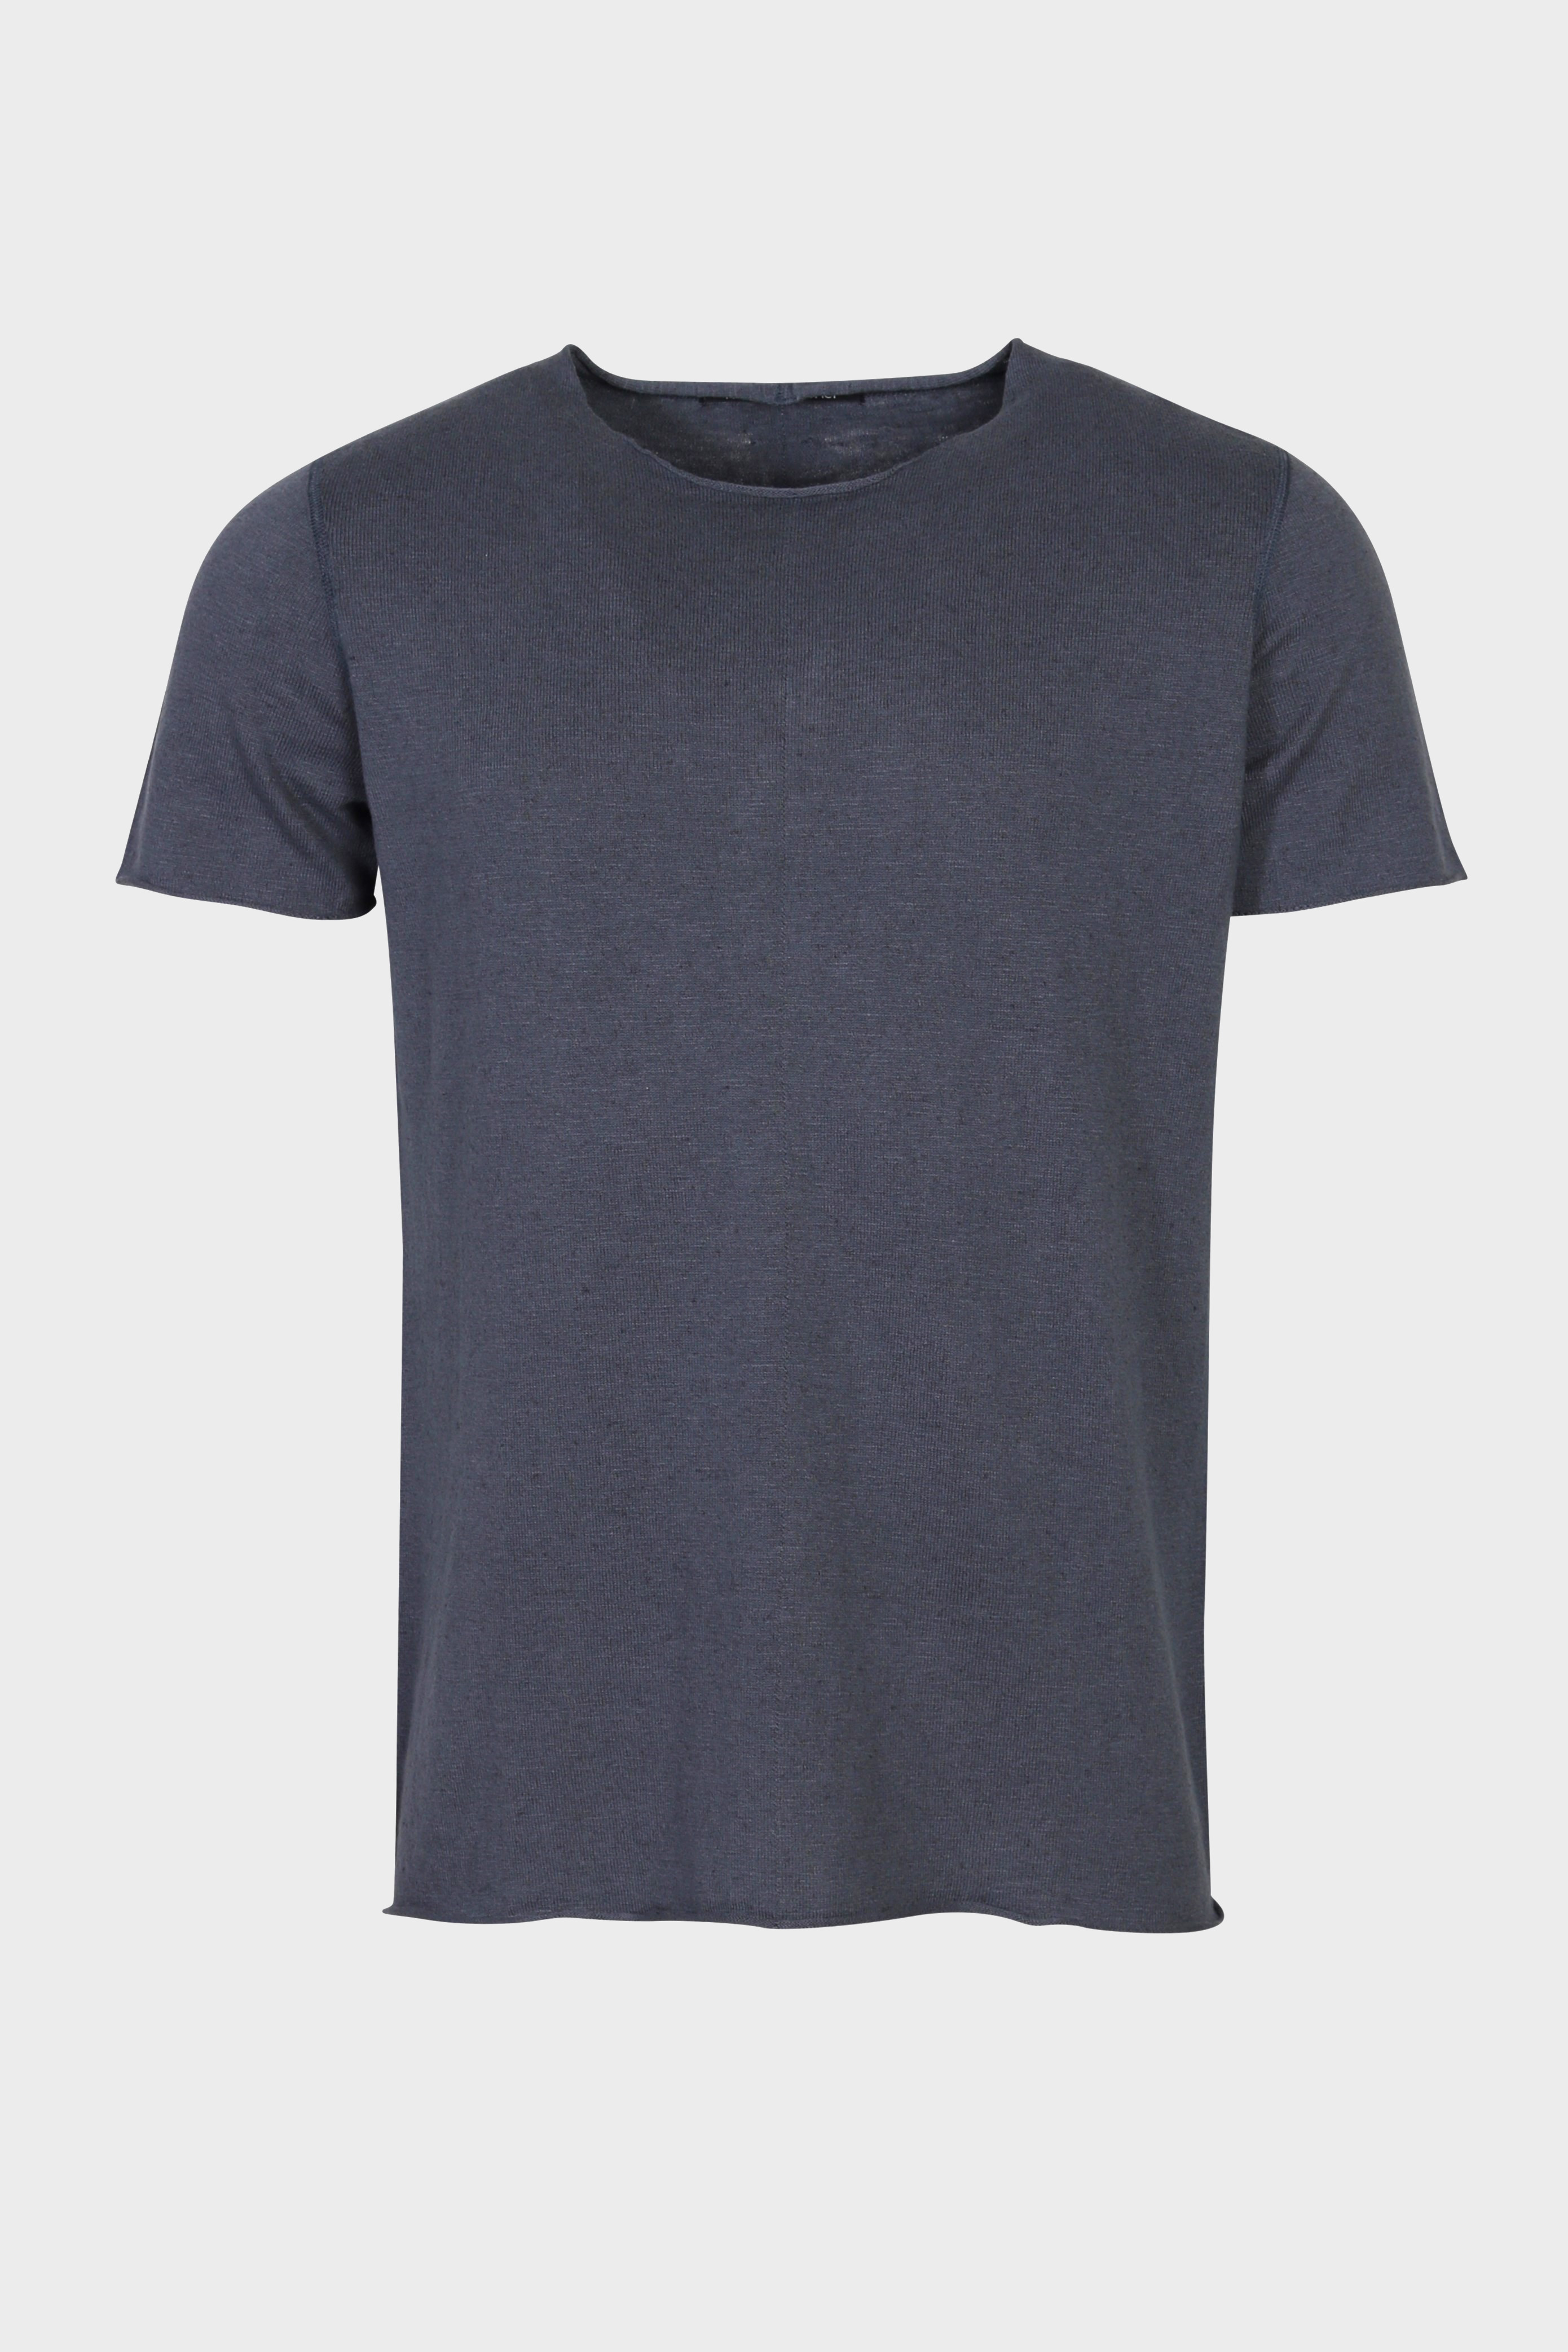 HANNES ROETHER Knit T-Shirt in Greyish Blue XL